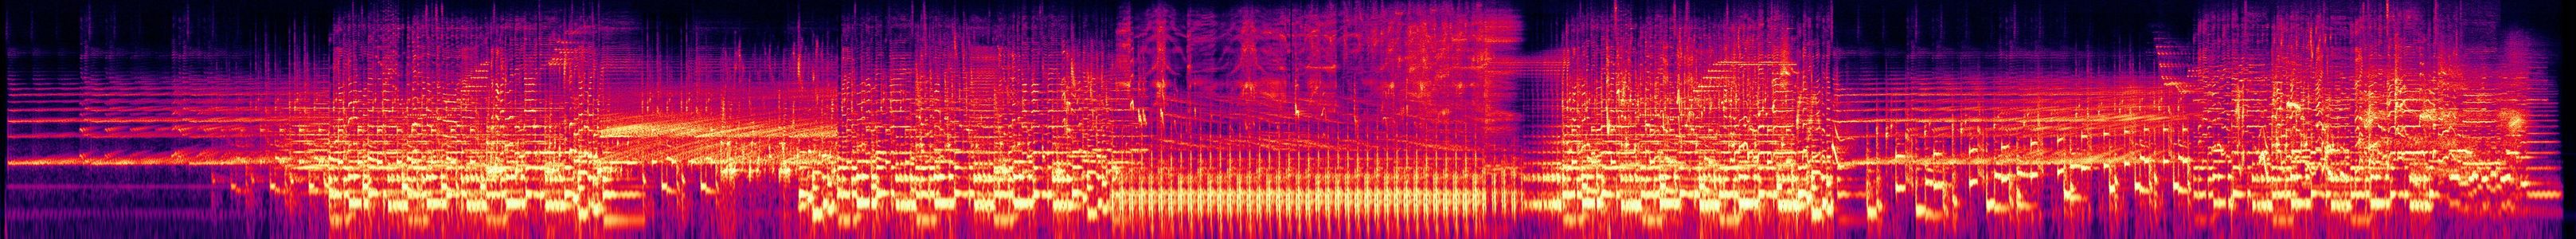 Love Without Sound - Spectrogram.jpg